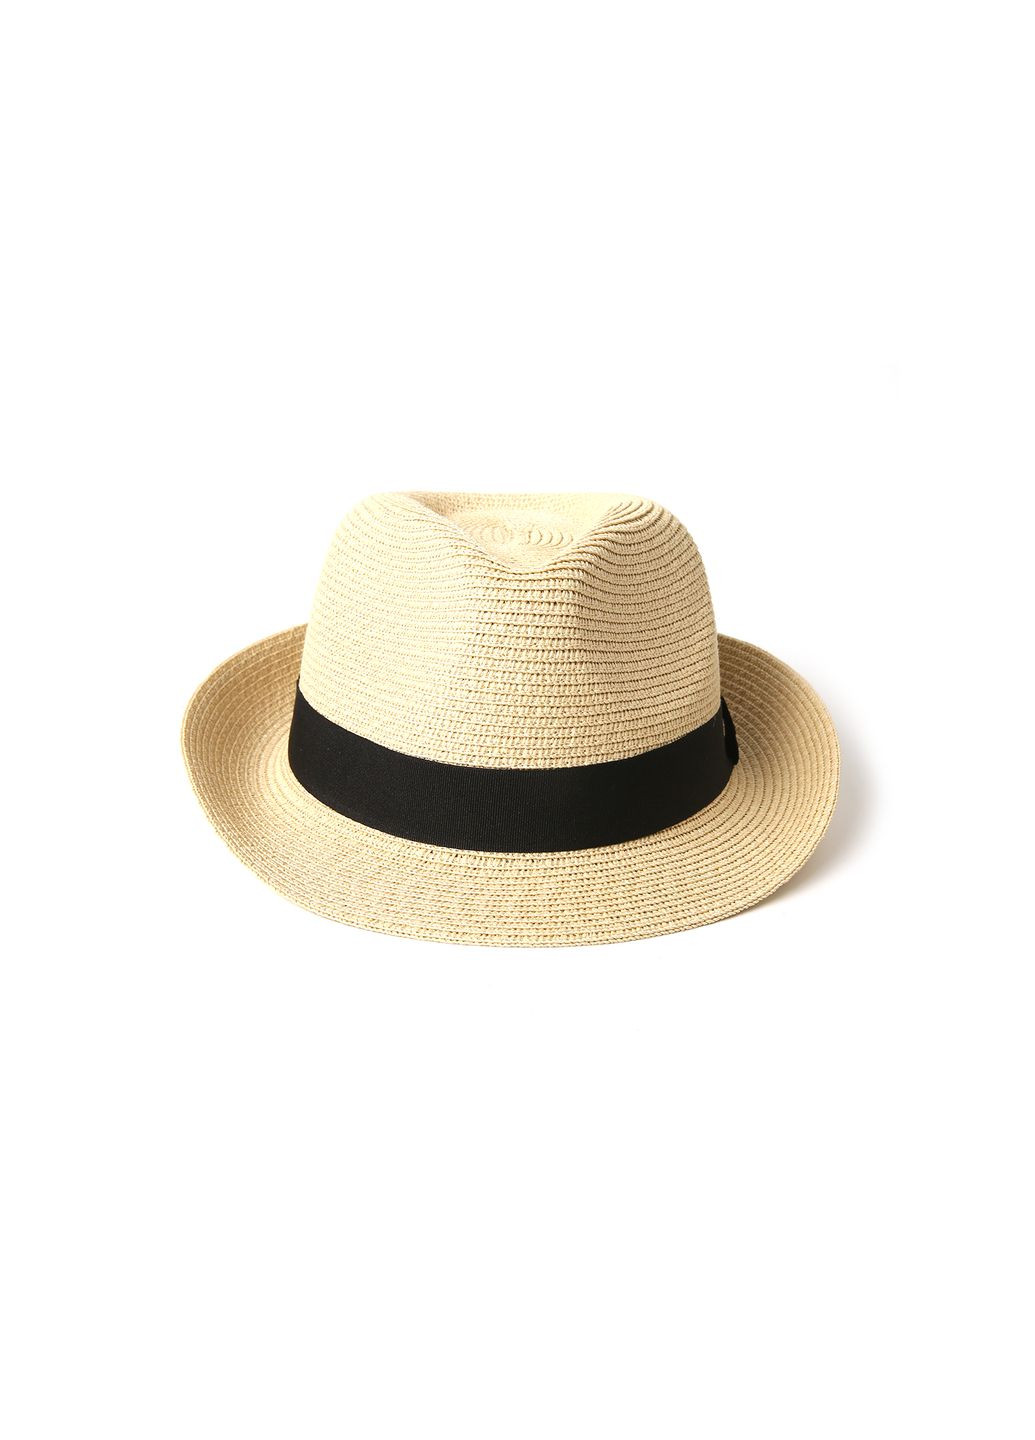 Шляпа трилби мужская бумага бежевая JOYCE 844-095 LuckyLOOK 844-095m (289358901)